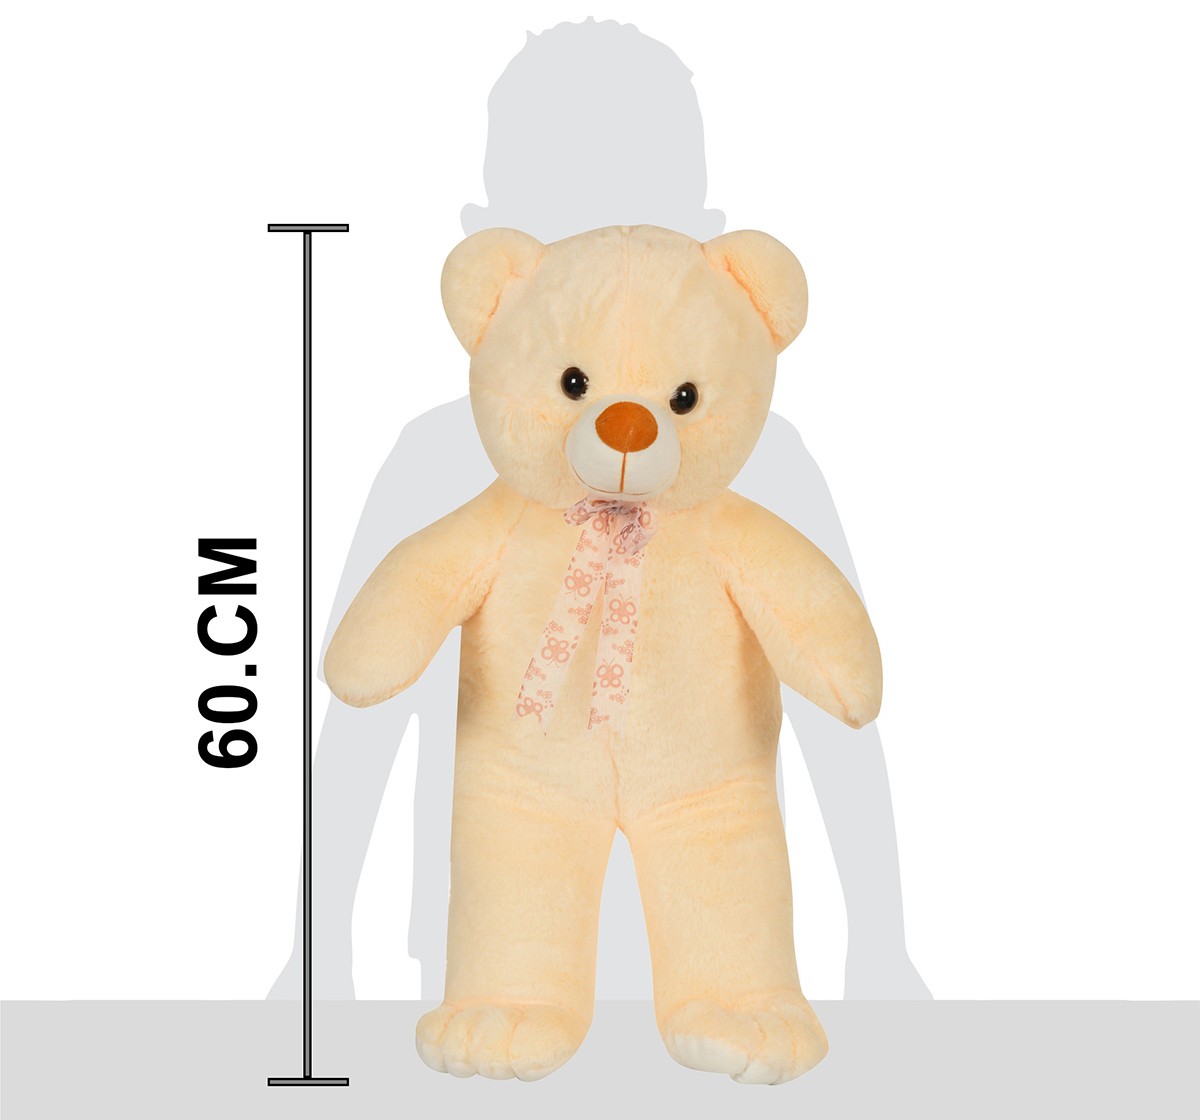 Mirada 60cm floppy teddy bear soft toy Multicolor 3Y+